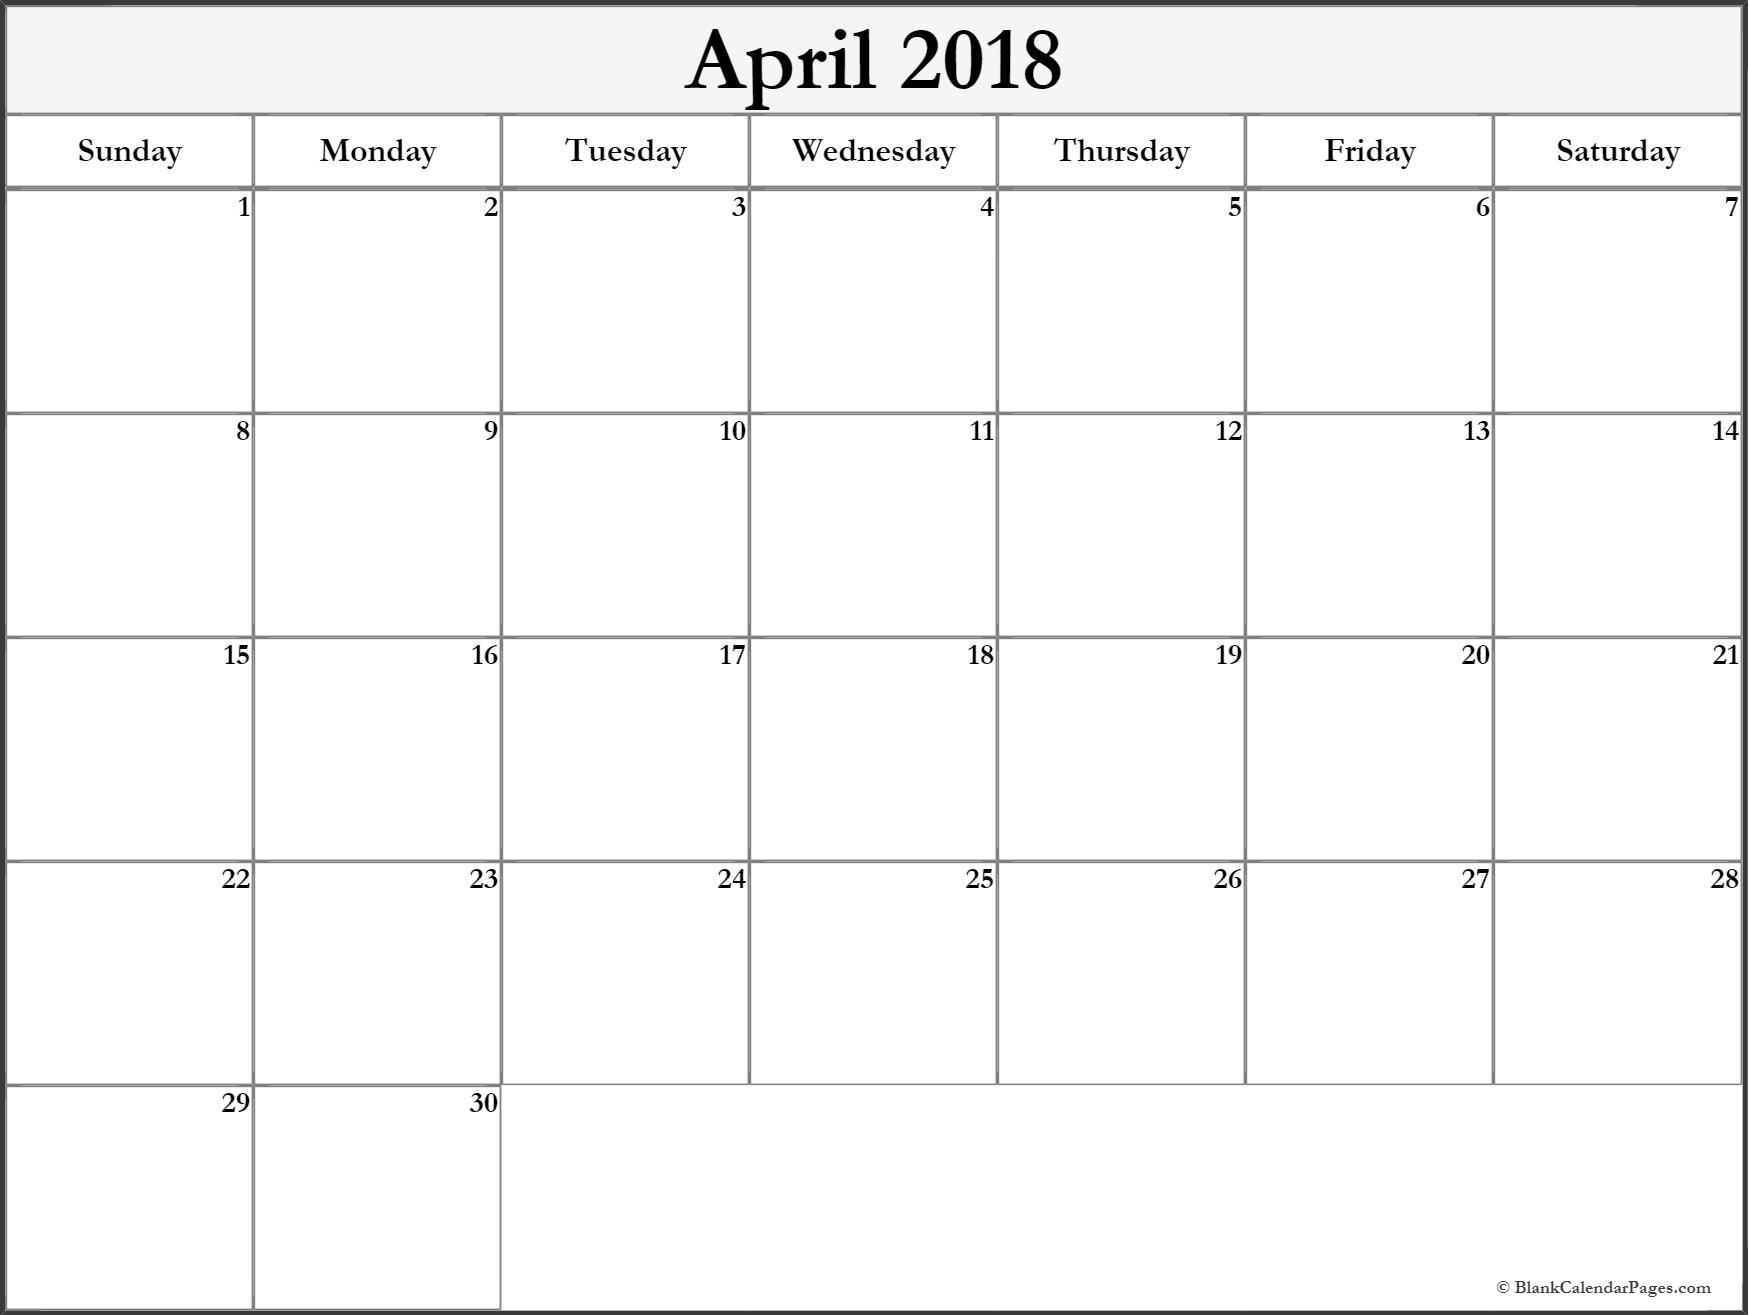 Remarkable Blank Calendar 31 Days • Printable Blank Calendar-A Blank Page Of 31 Days Of A Calendar